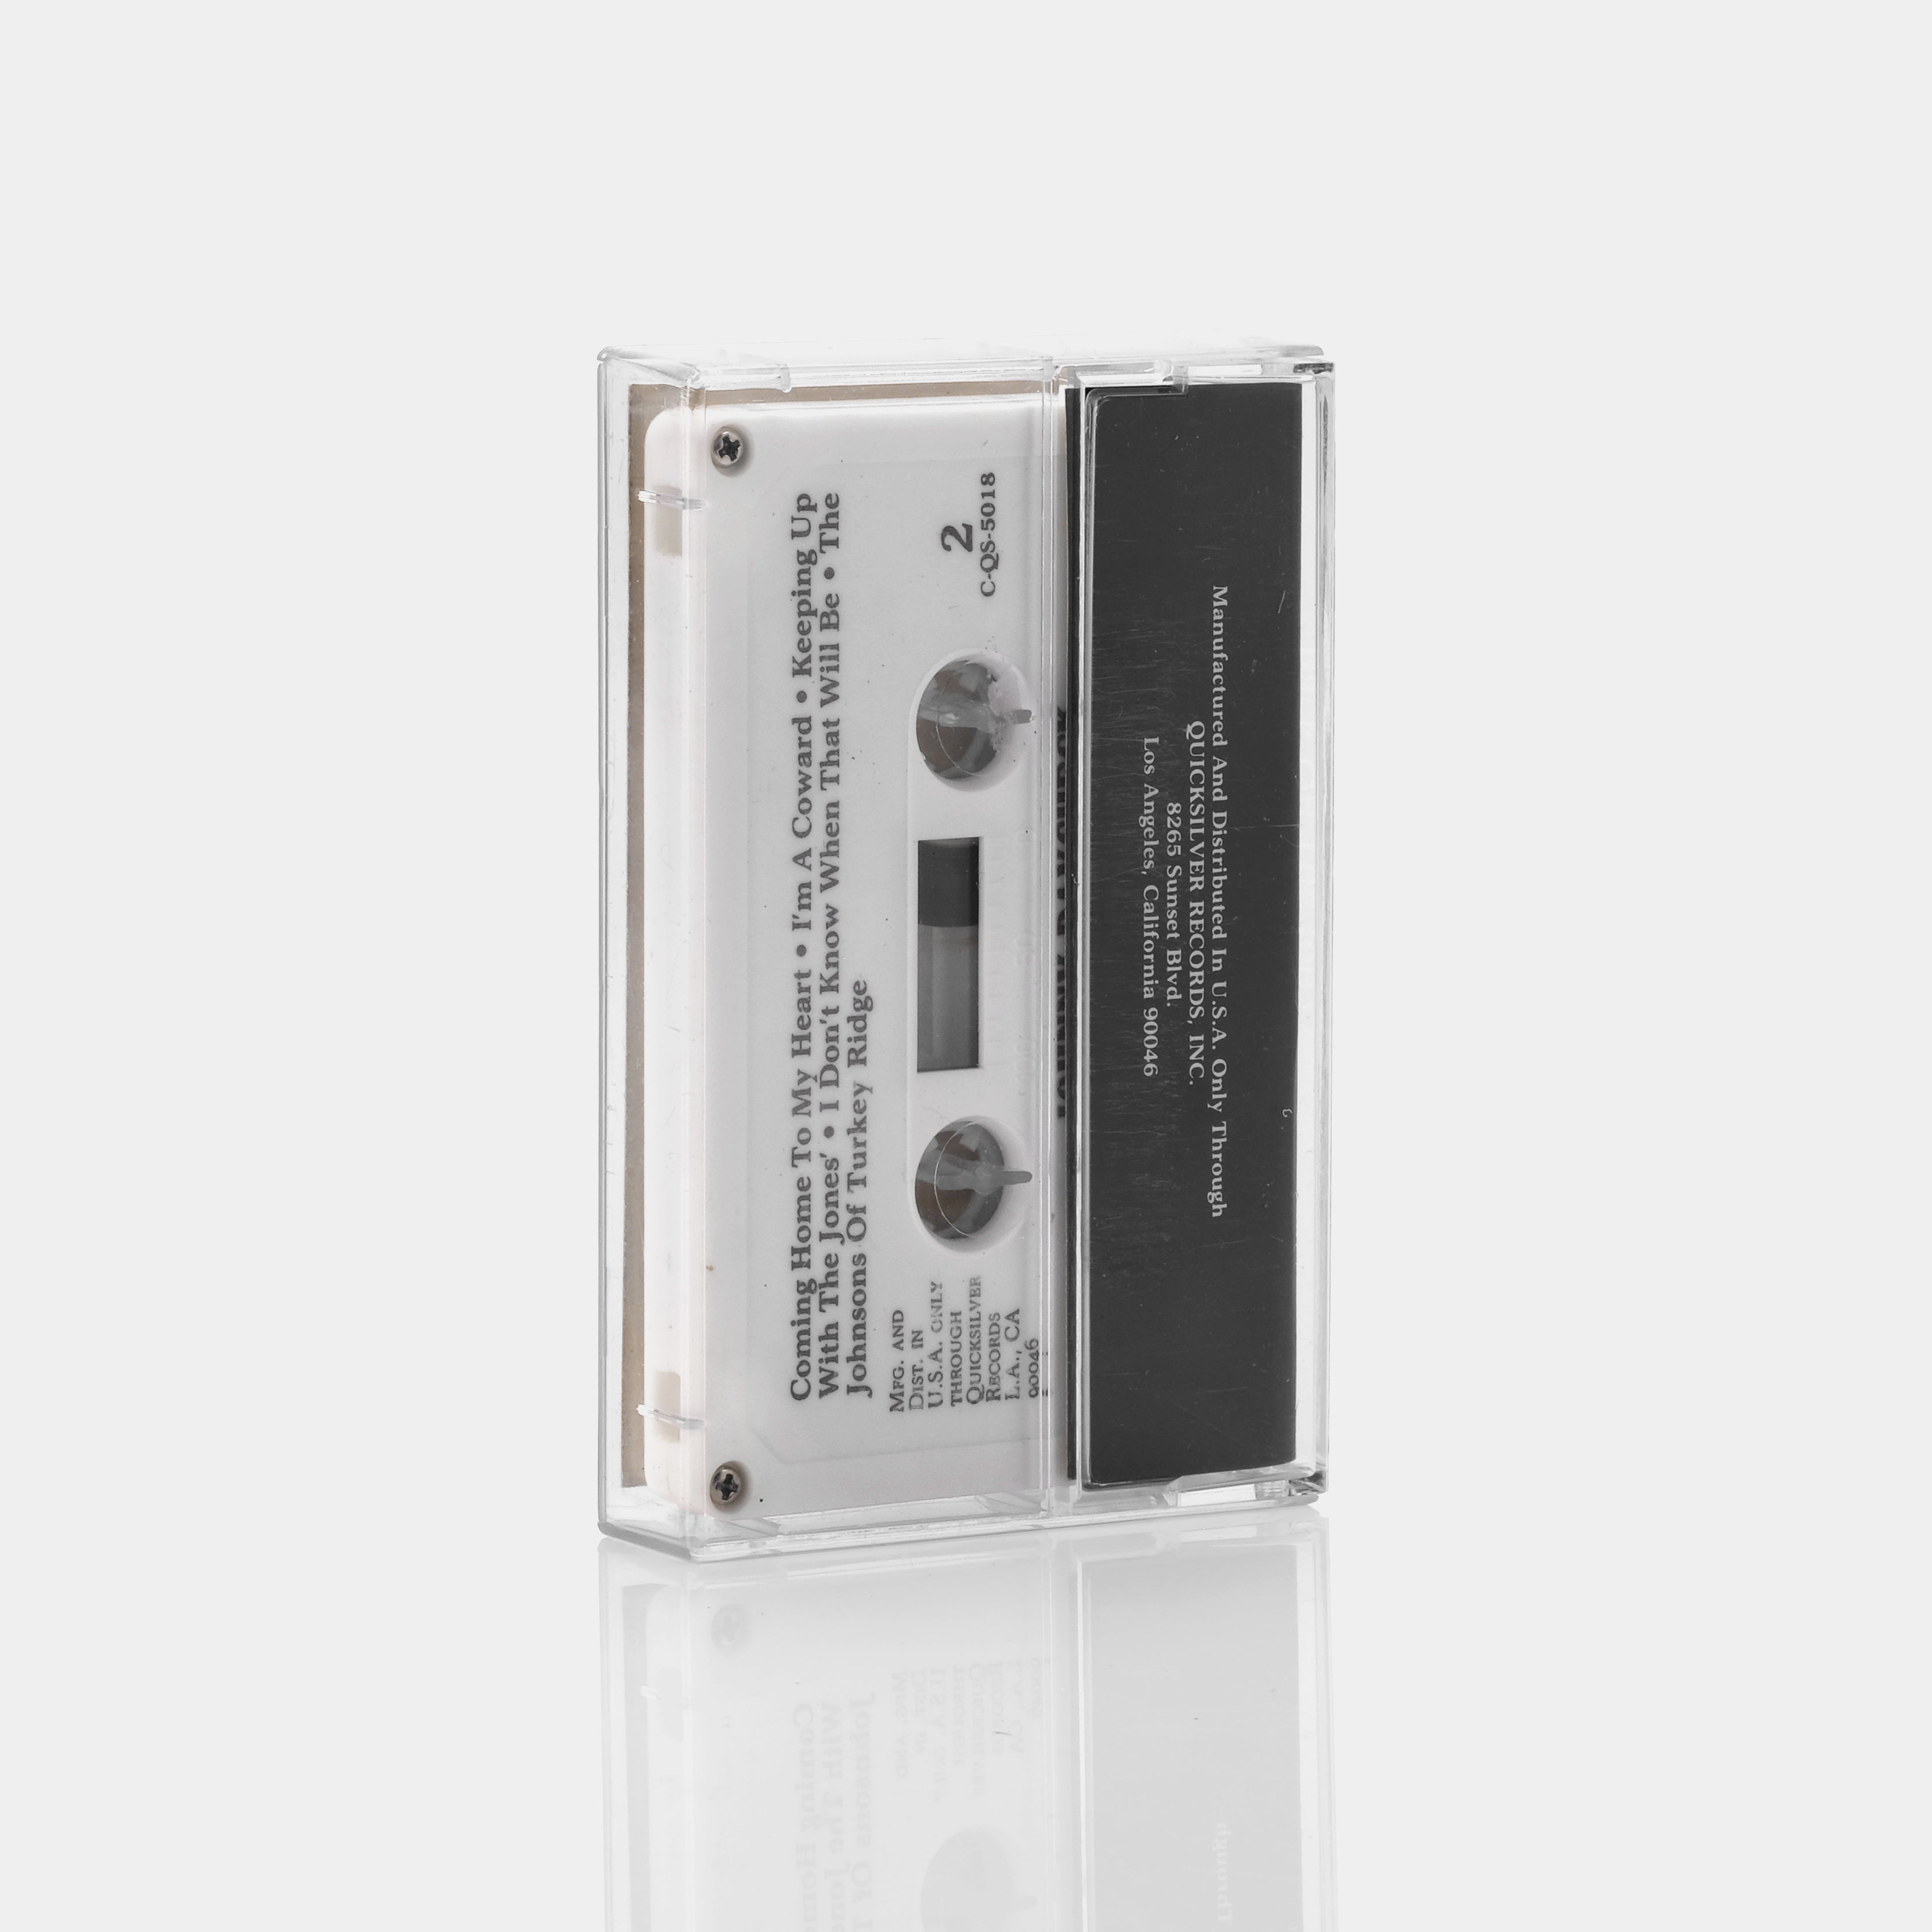 Johnny Paycheck - Back On The Job Cassette Tape